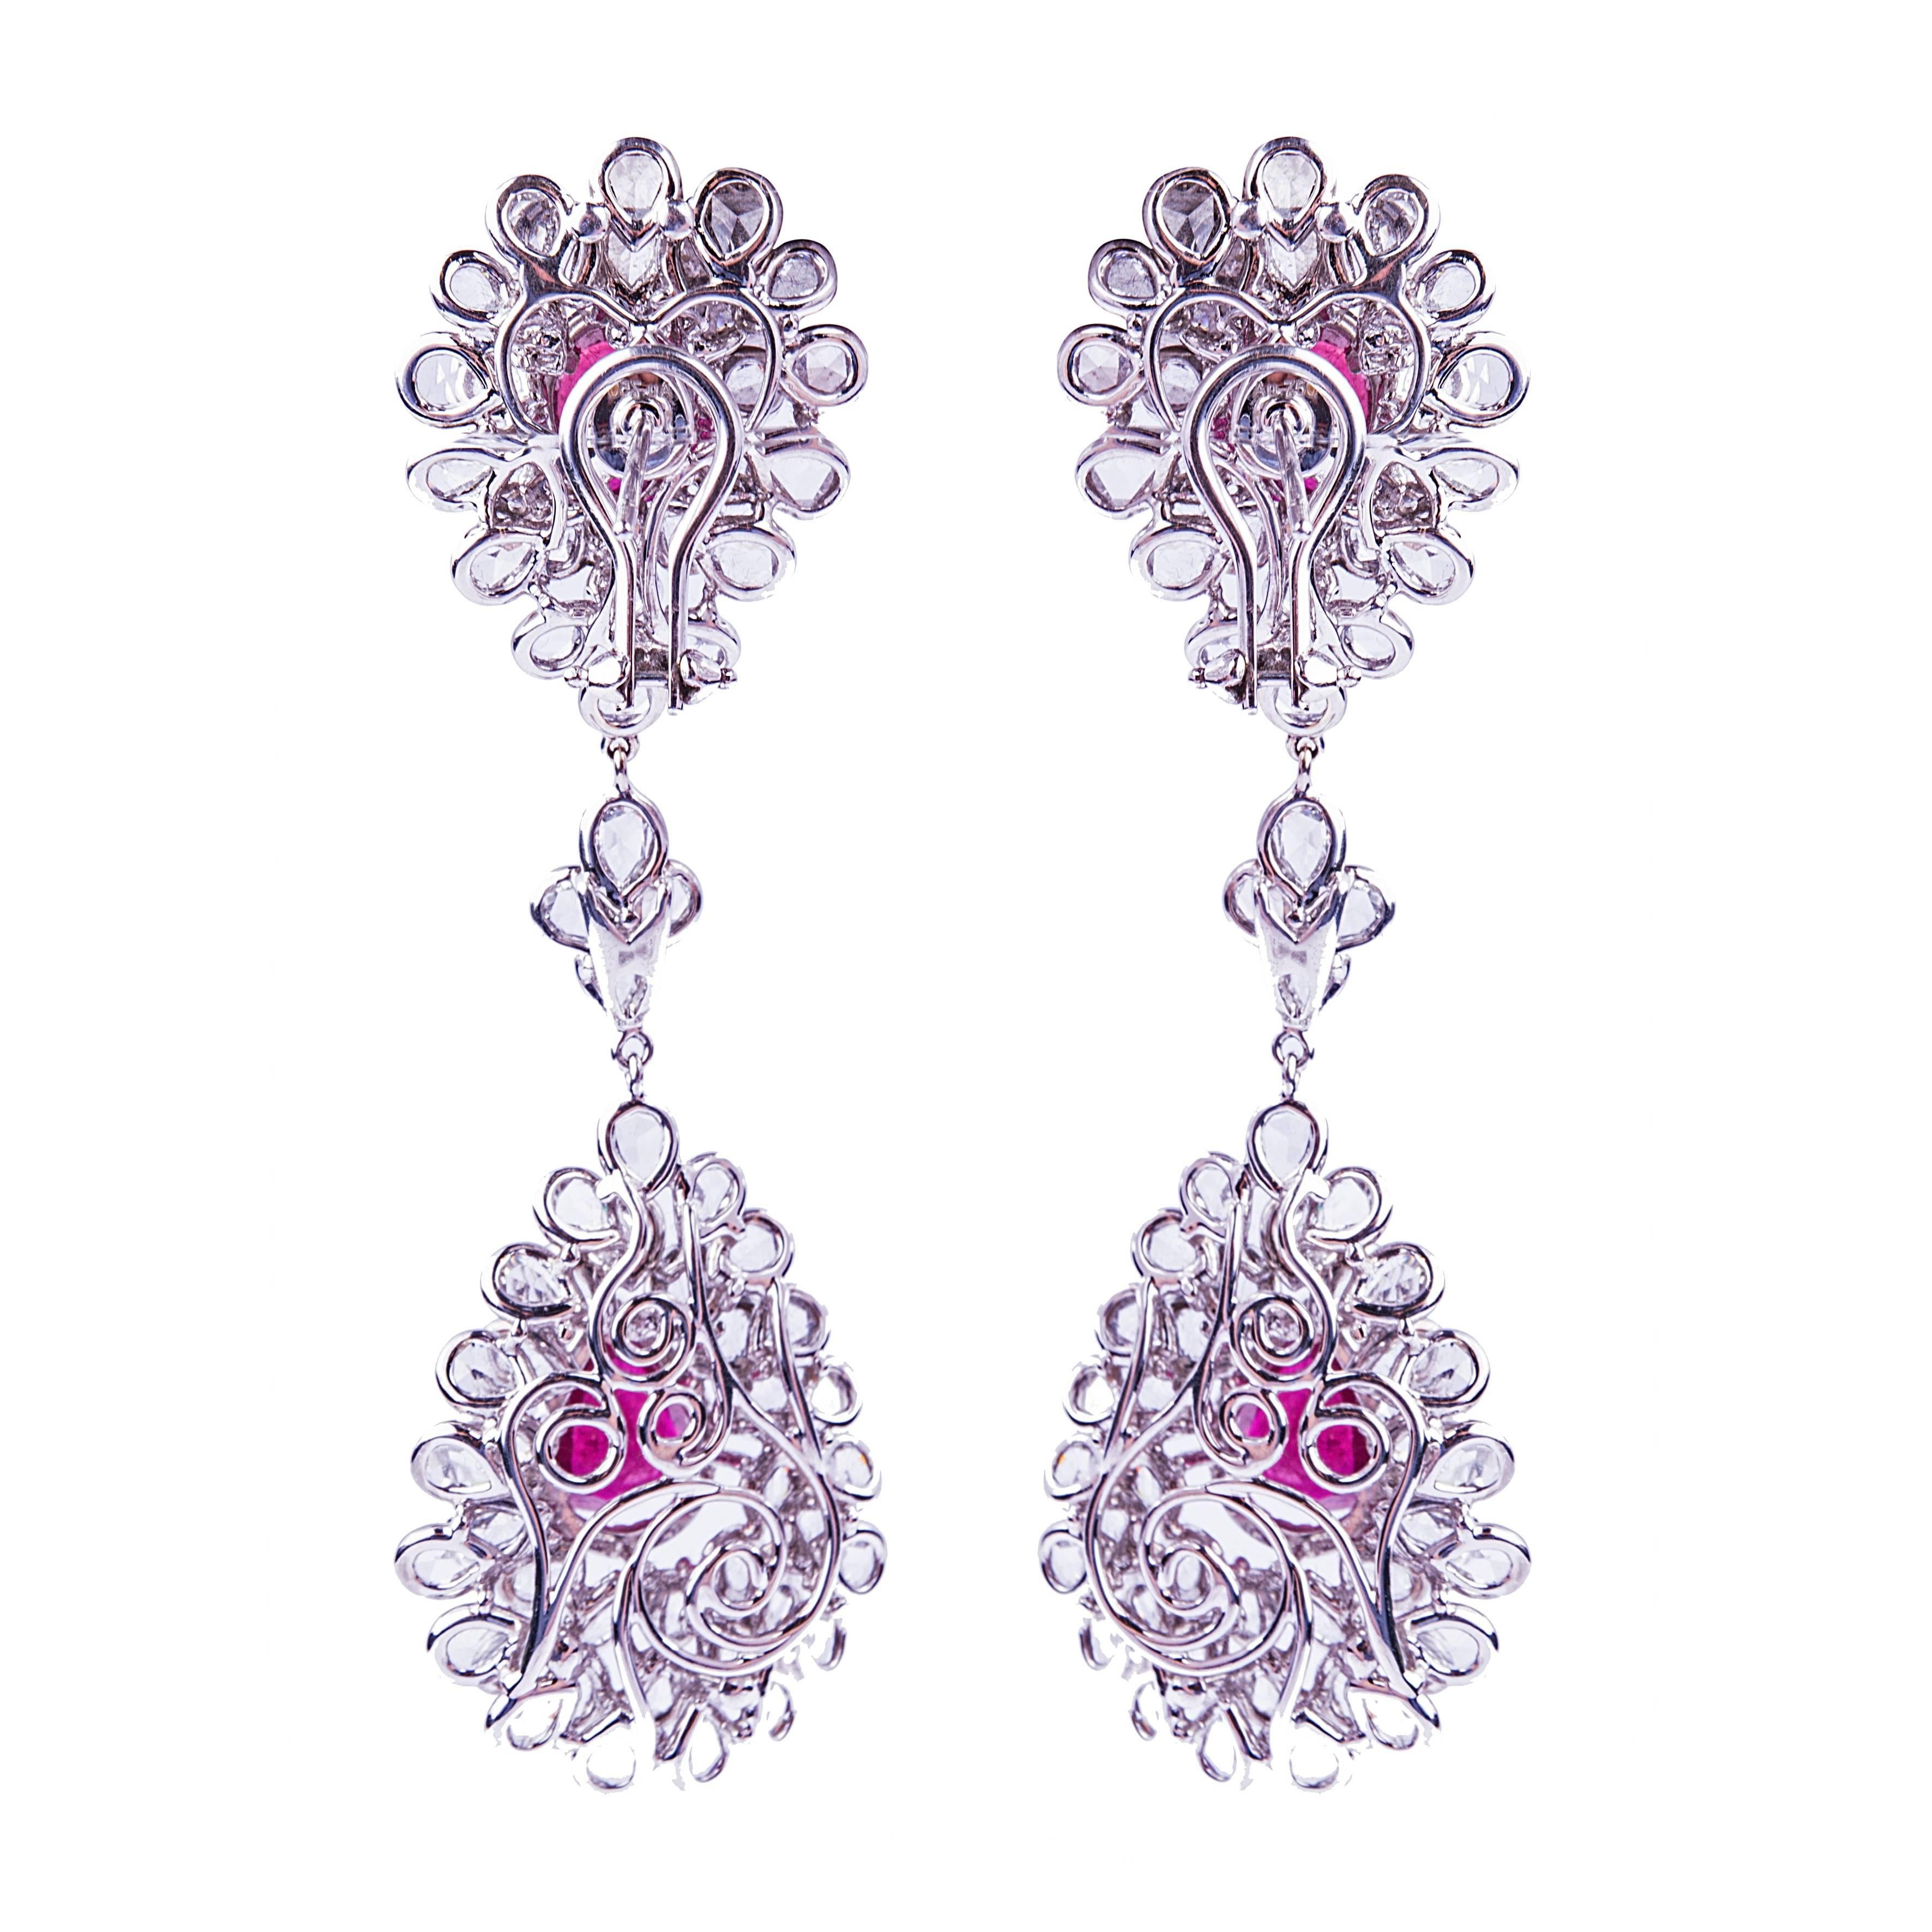 Ruby and Rose Cut Diamond earrings

Rubies: 9.73 ct
Diamonds: 12.68 ct